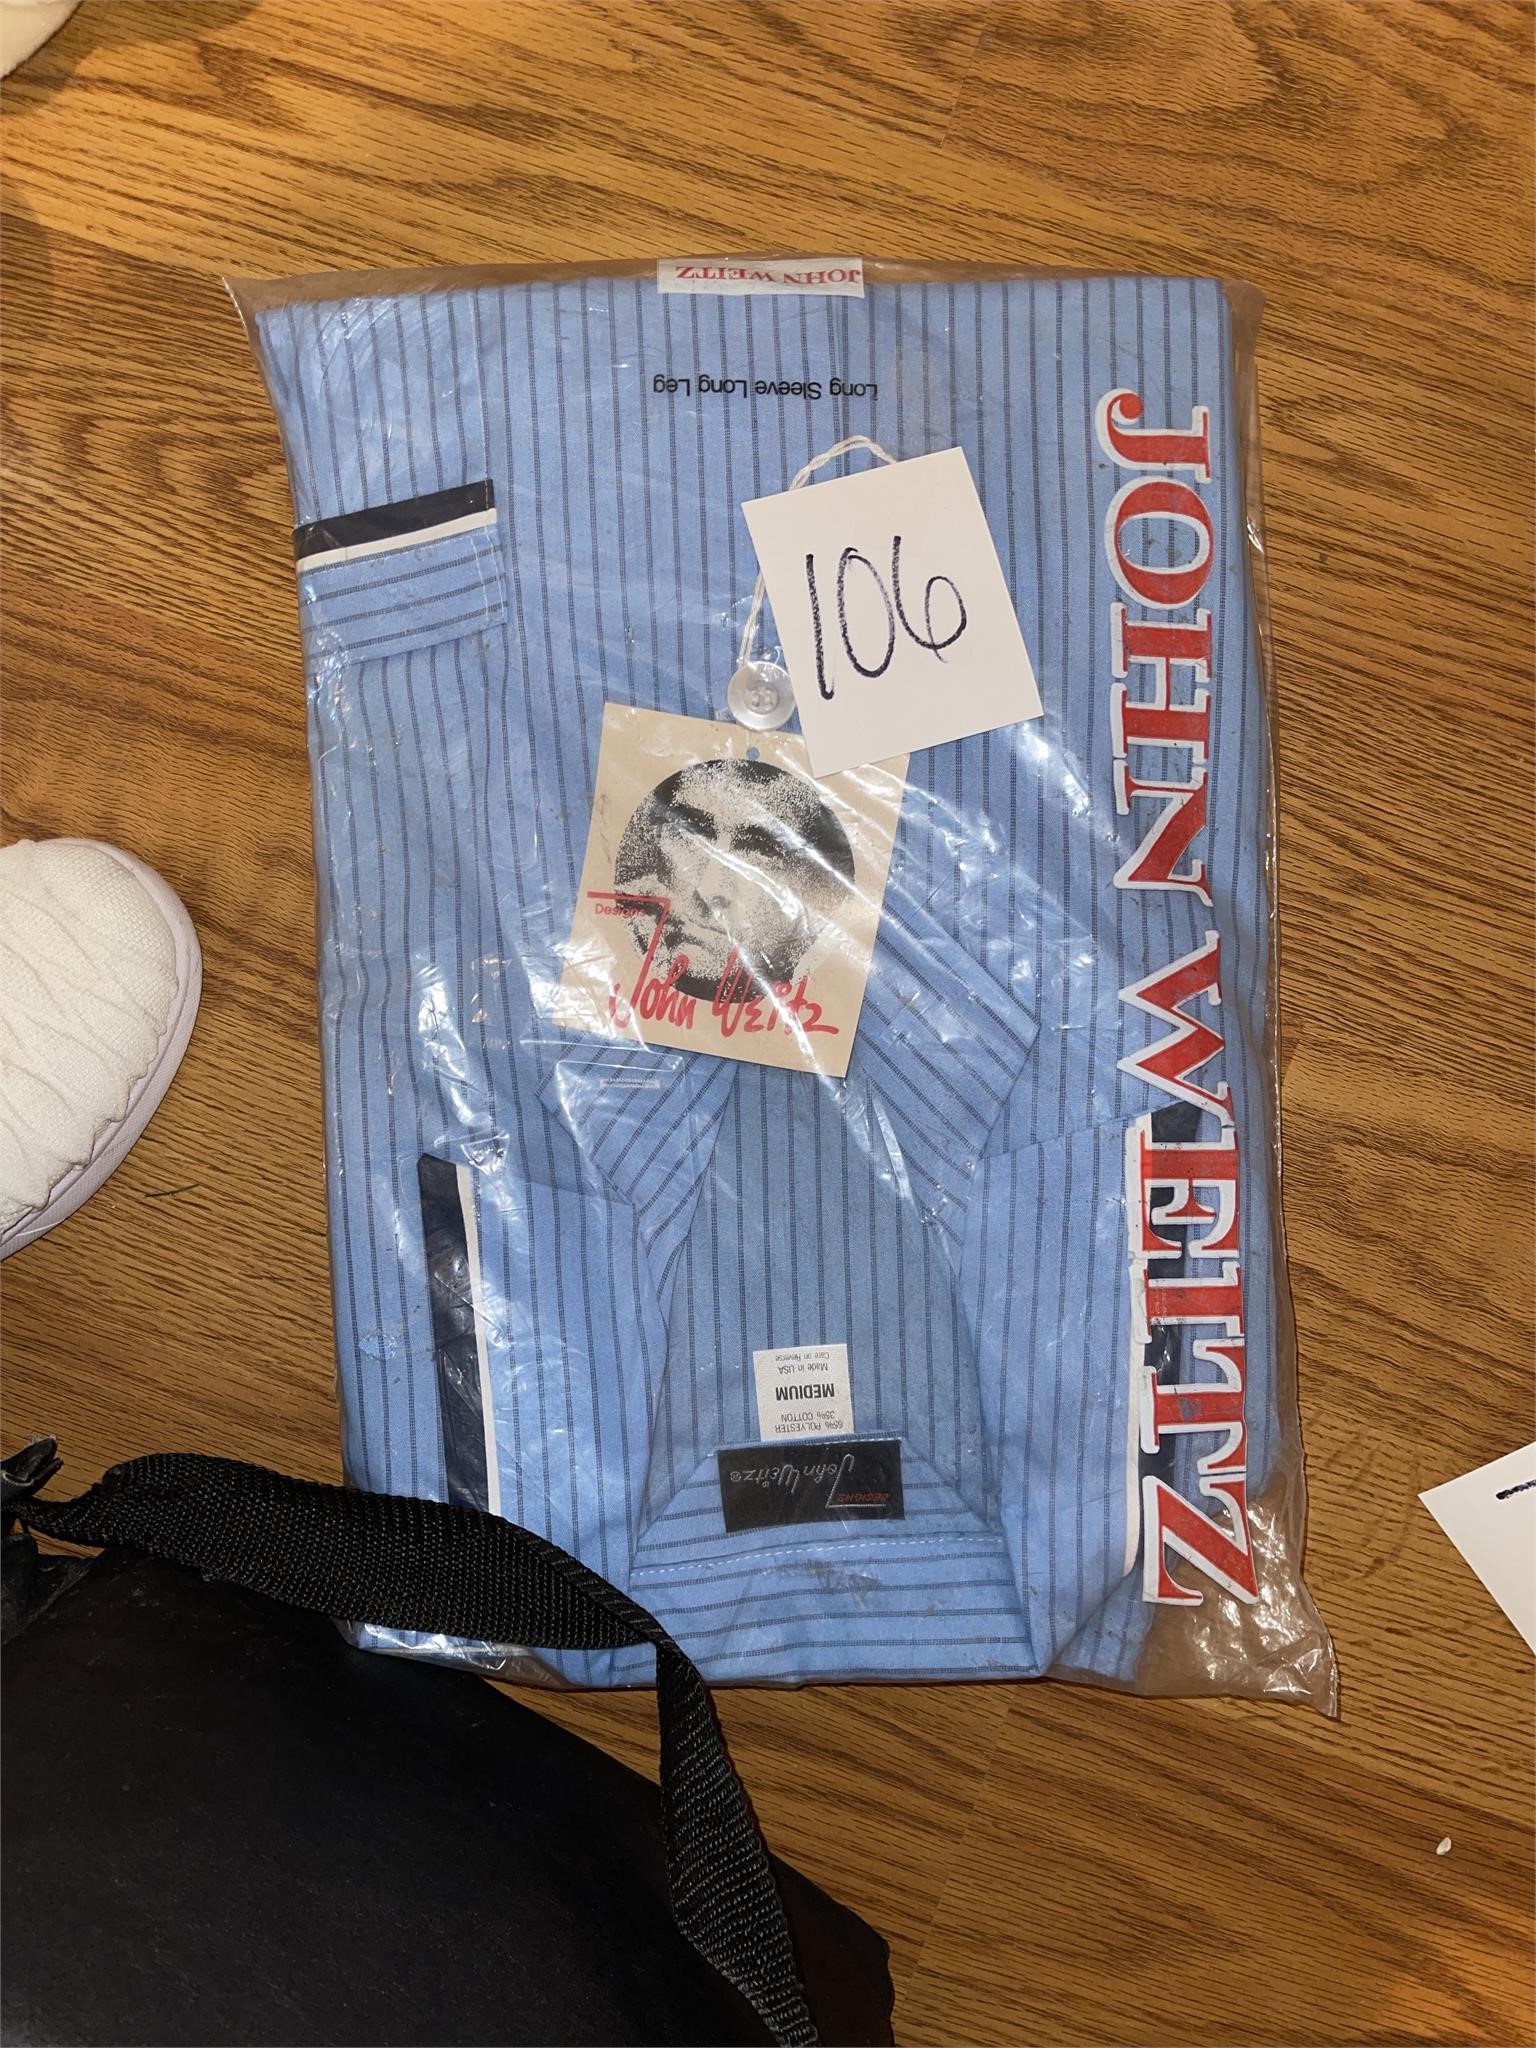 NOS men's John Weitz shirt size medium